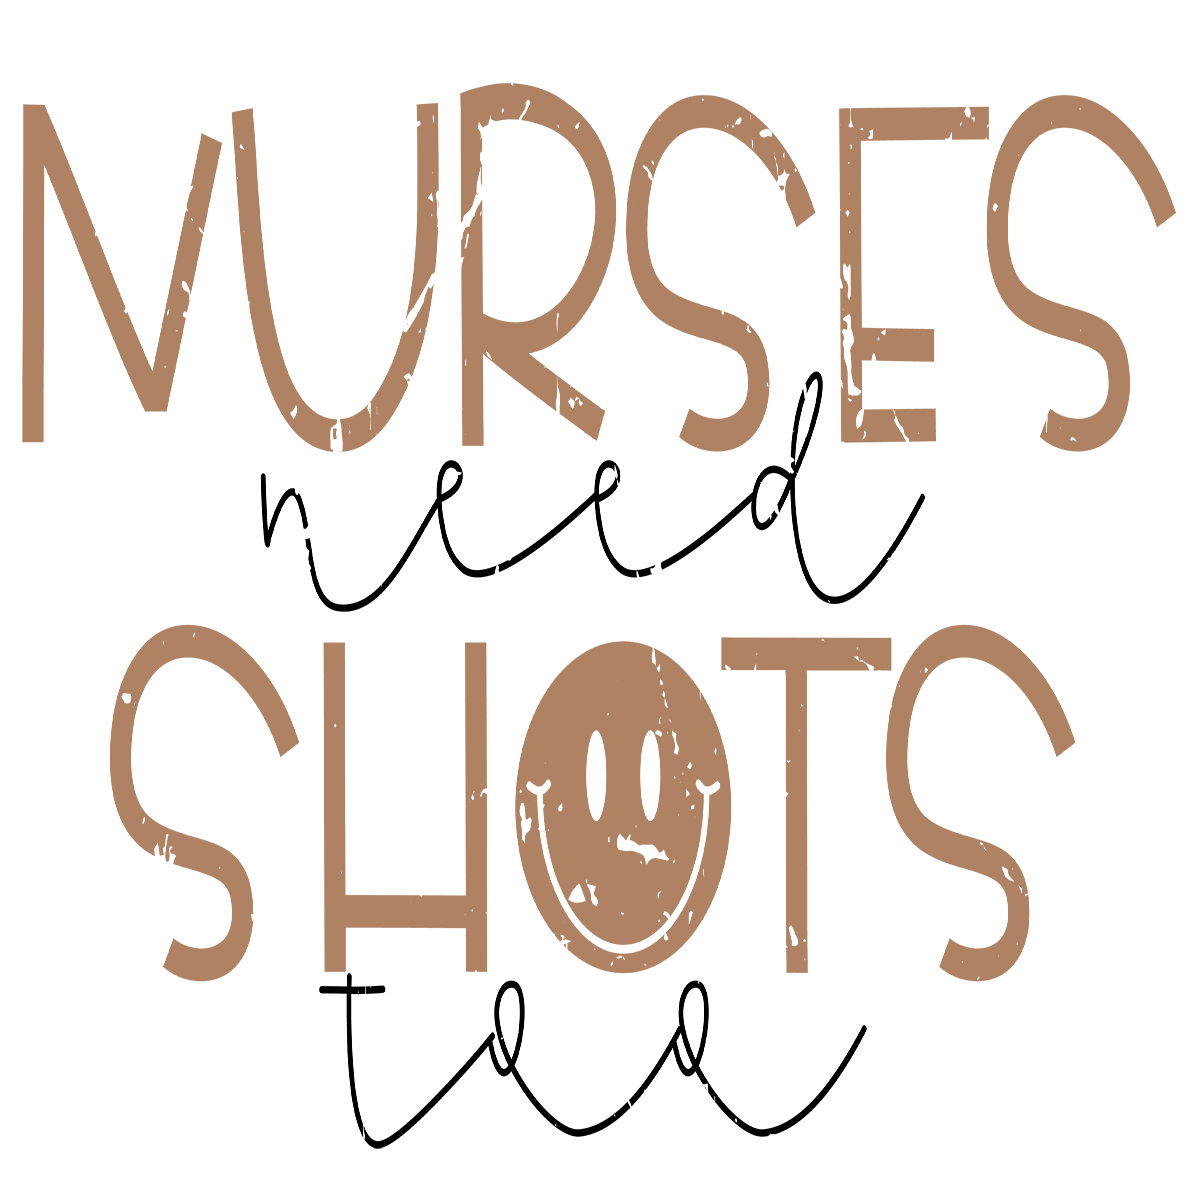 "Nurses Need Shots Too" Transfer